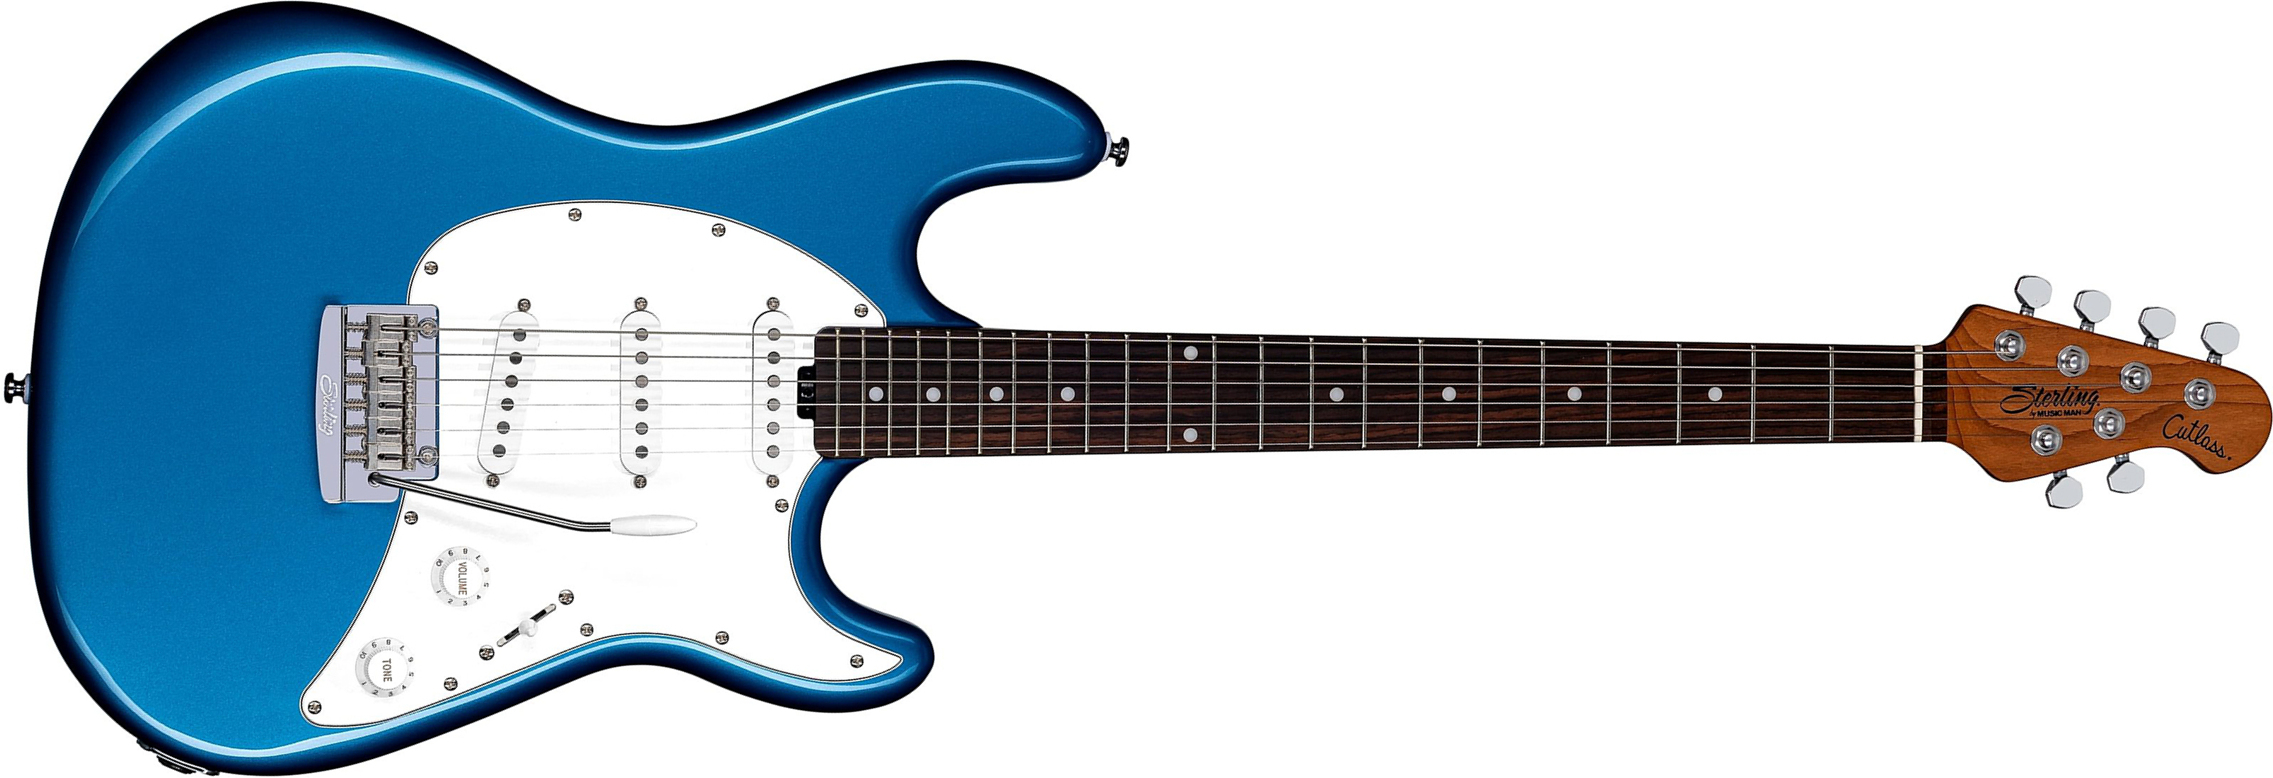 Sterling By Musicman Cutlass Ct50sss 3s Trem Rw - Toluca Lake Blue - E-Gitarre in Str-Form - Main picture